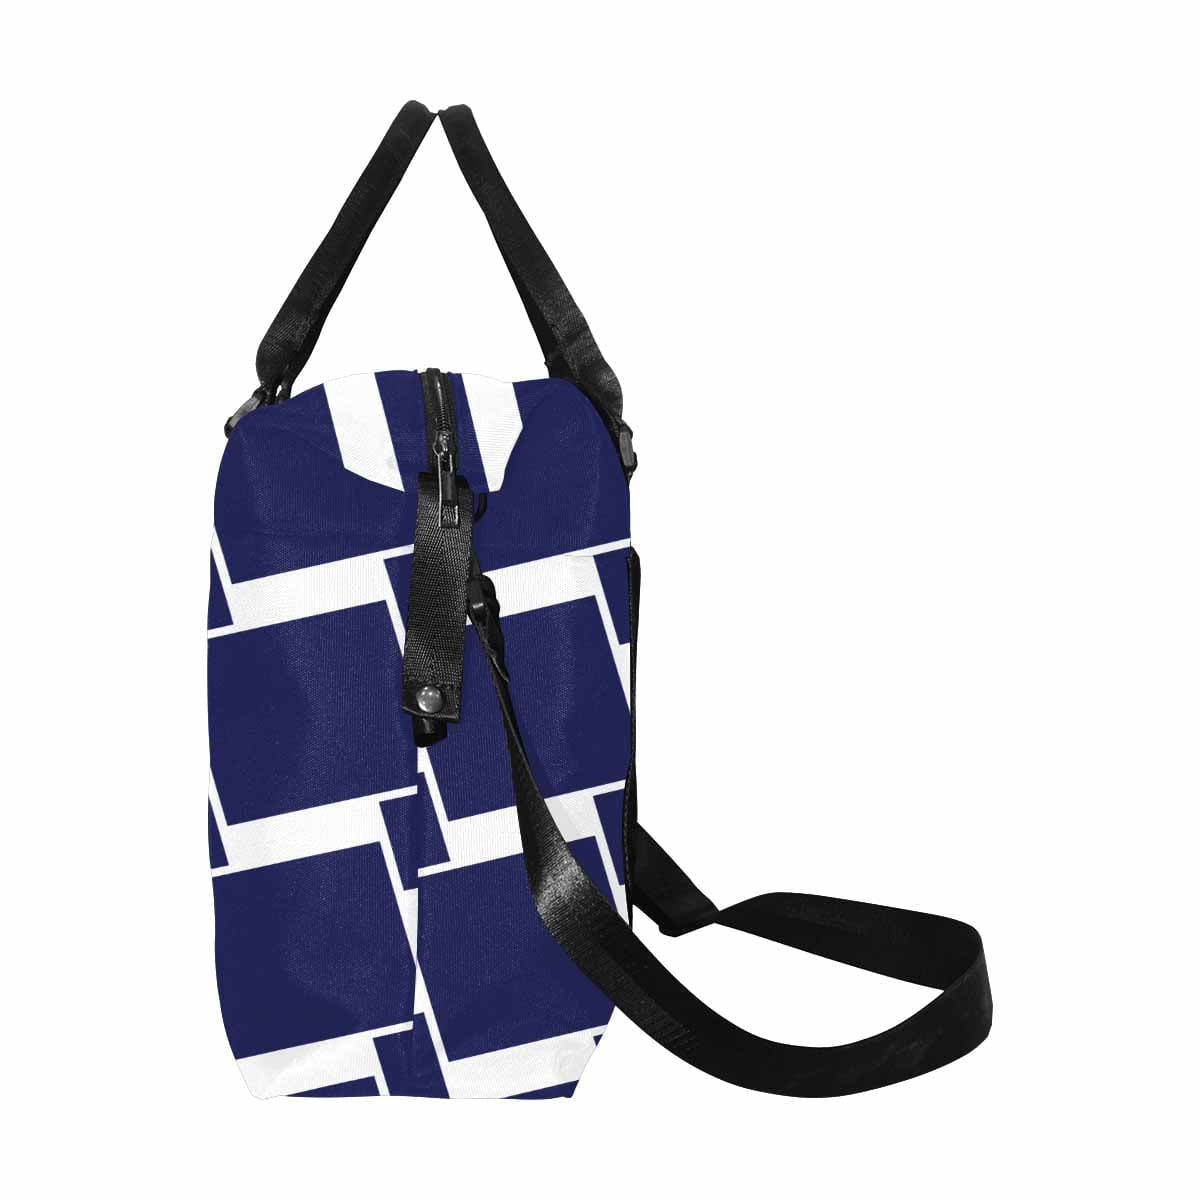 Duffle Bag - Large Capacity - Dark Purple - Bags | Travel Bags | Canvas Carry